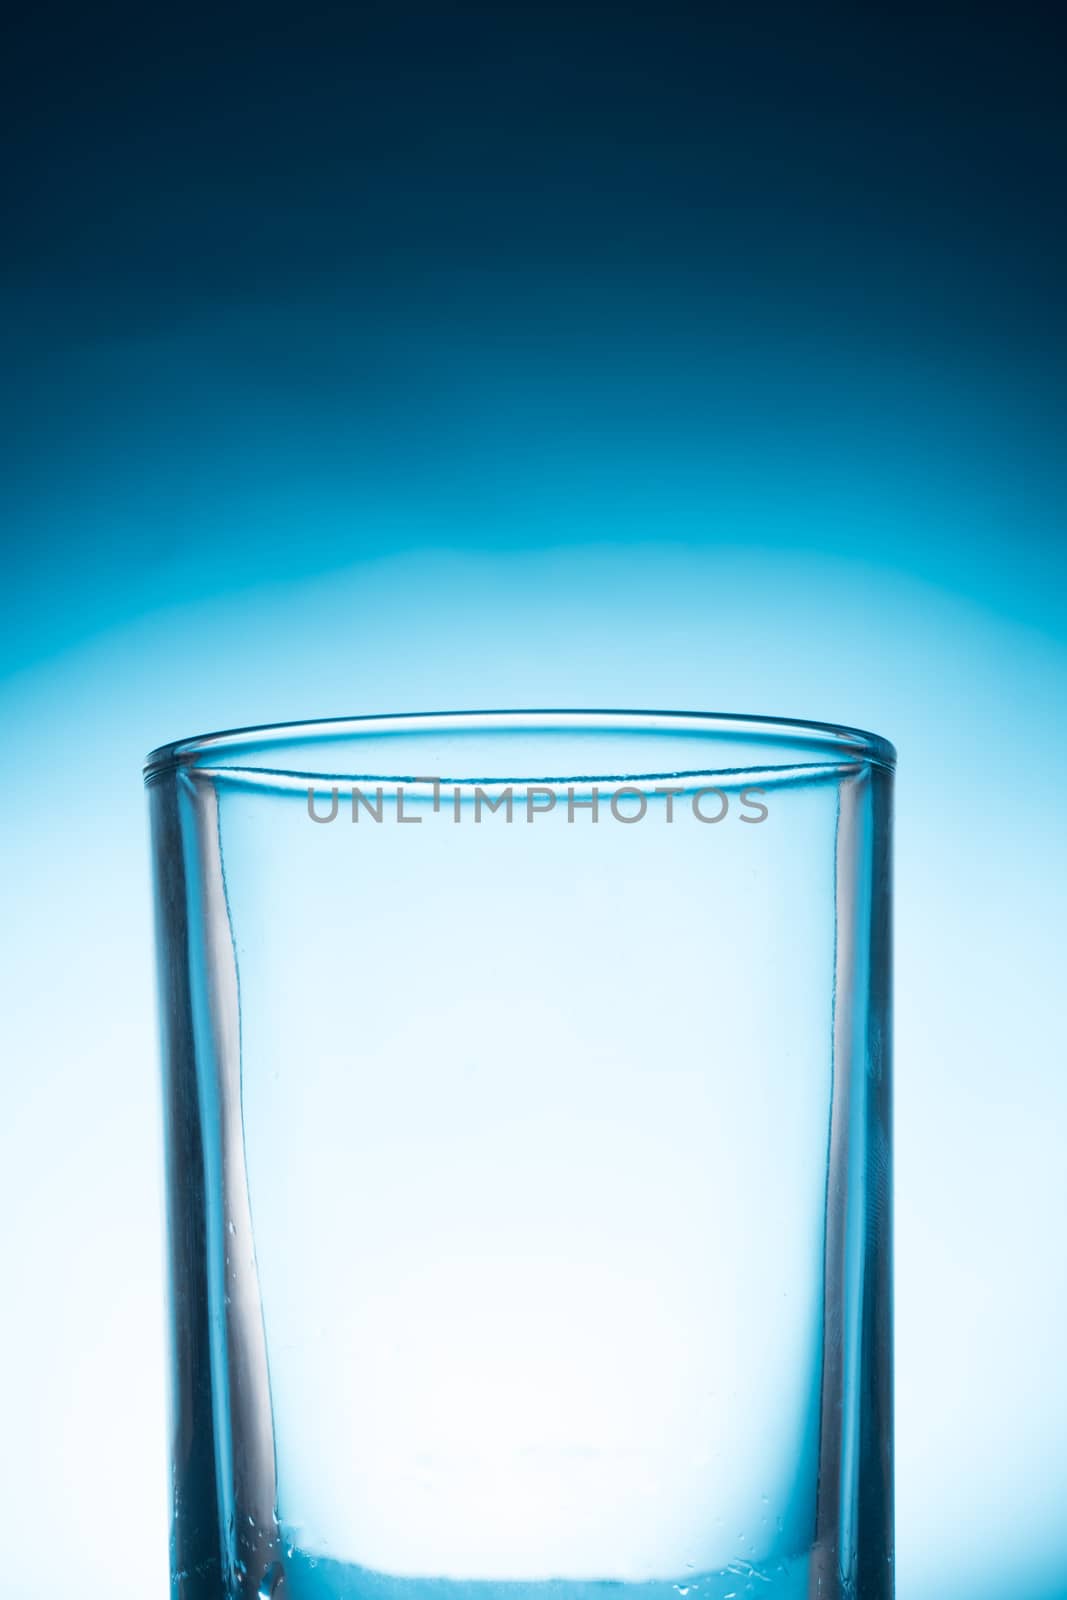 Empty glass on a blue background.